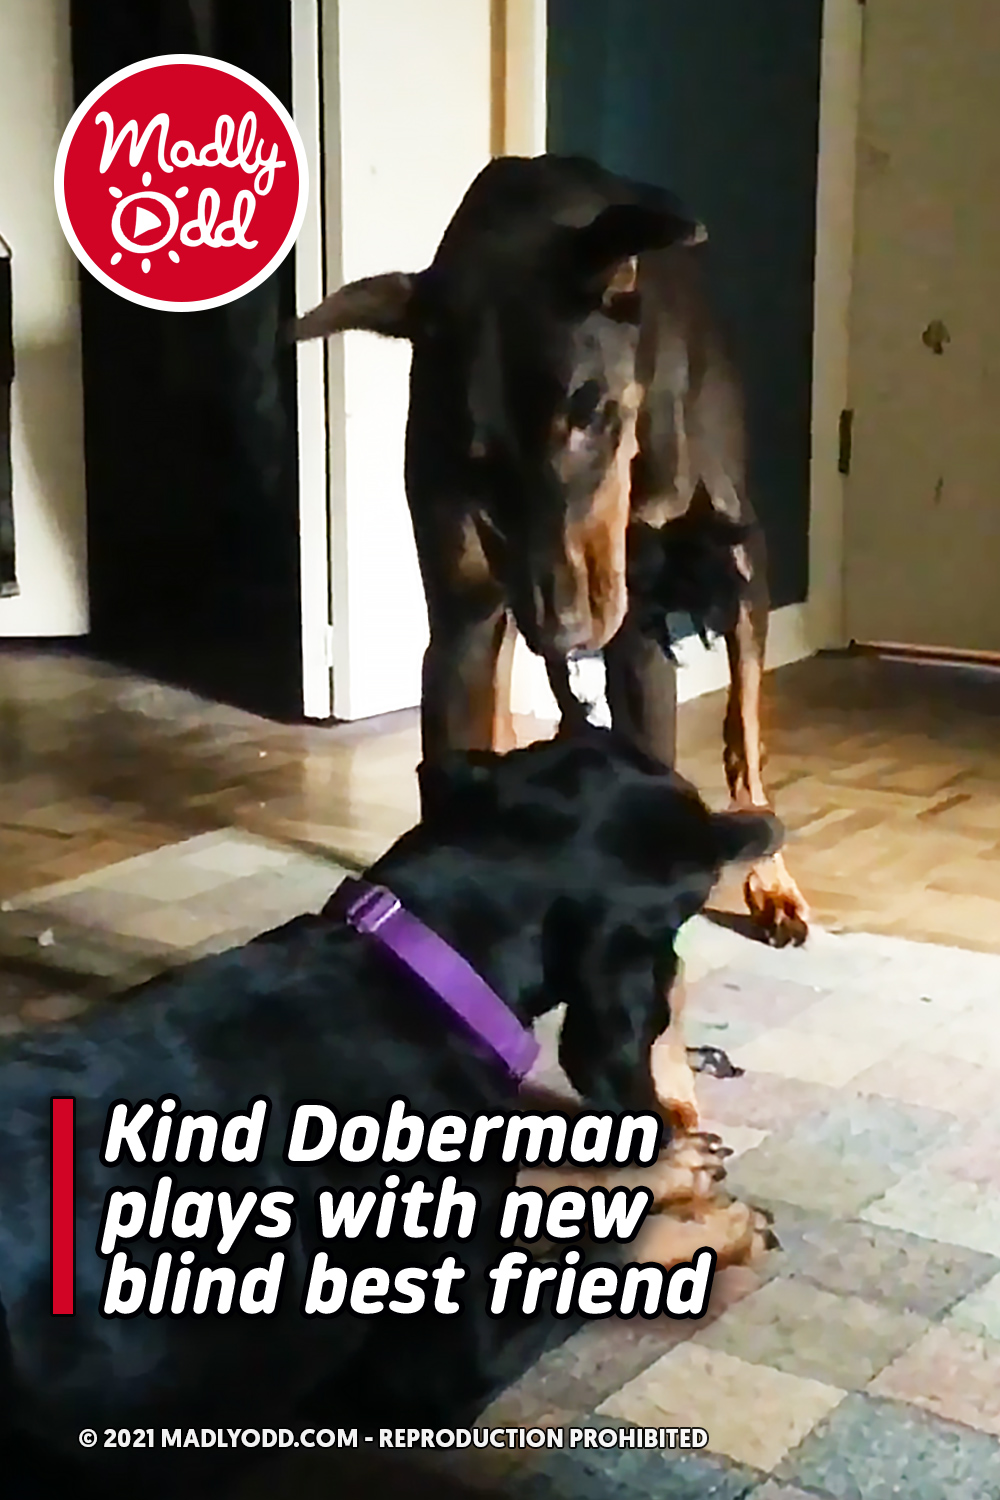 Kind Doberman plays with new blind best friend